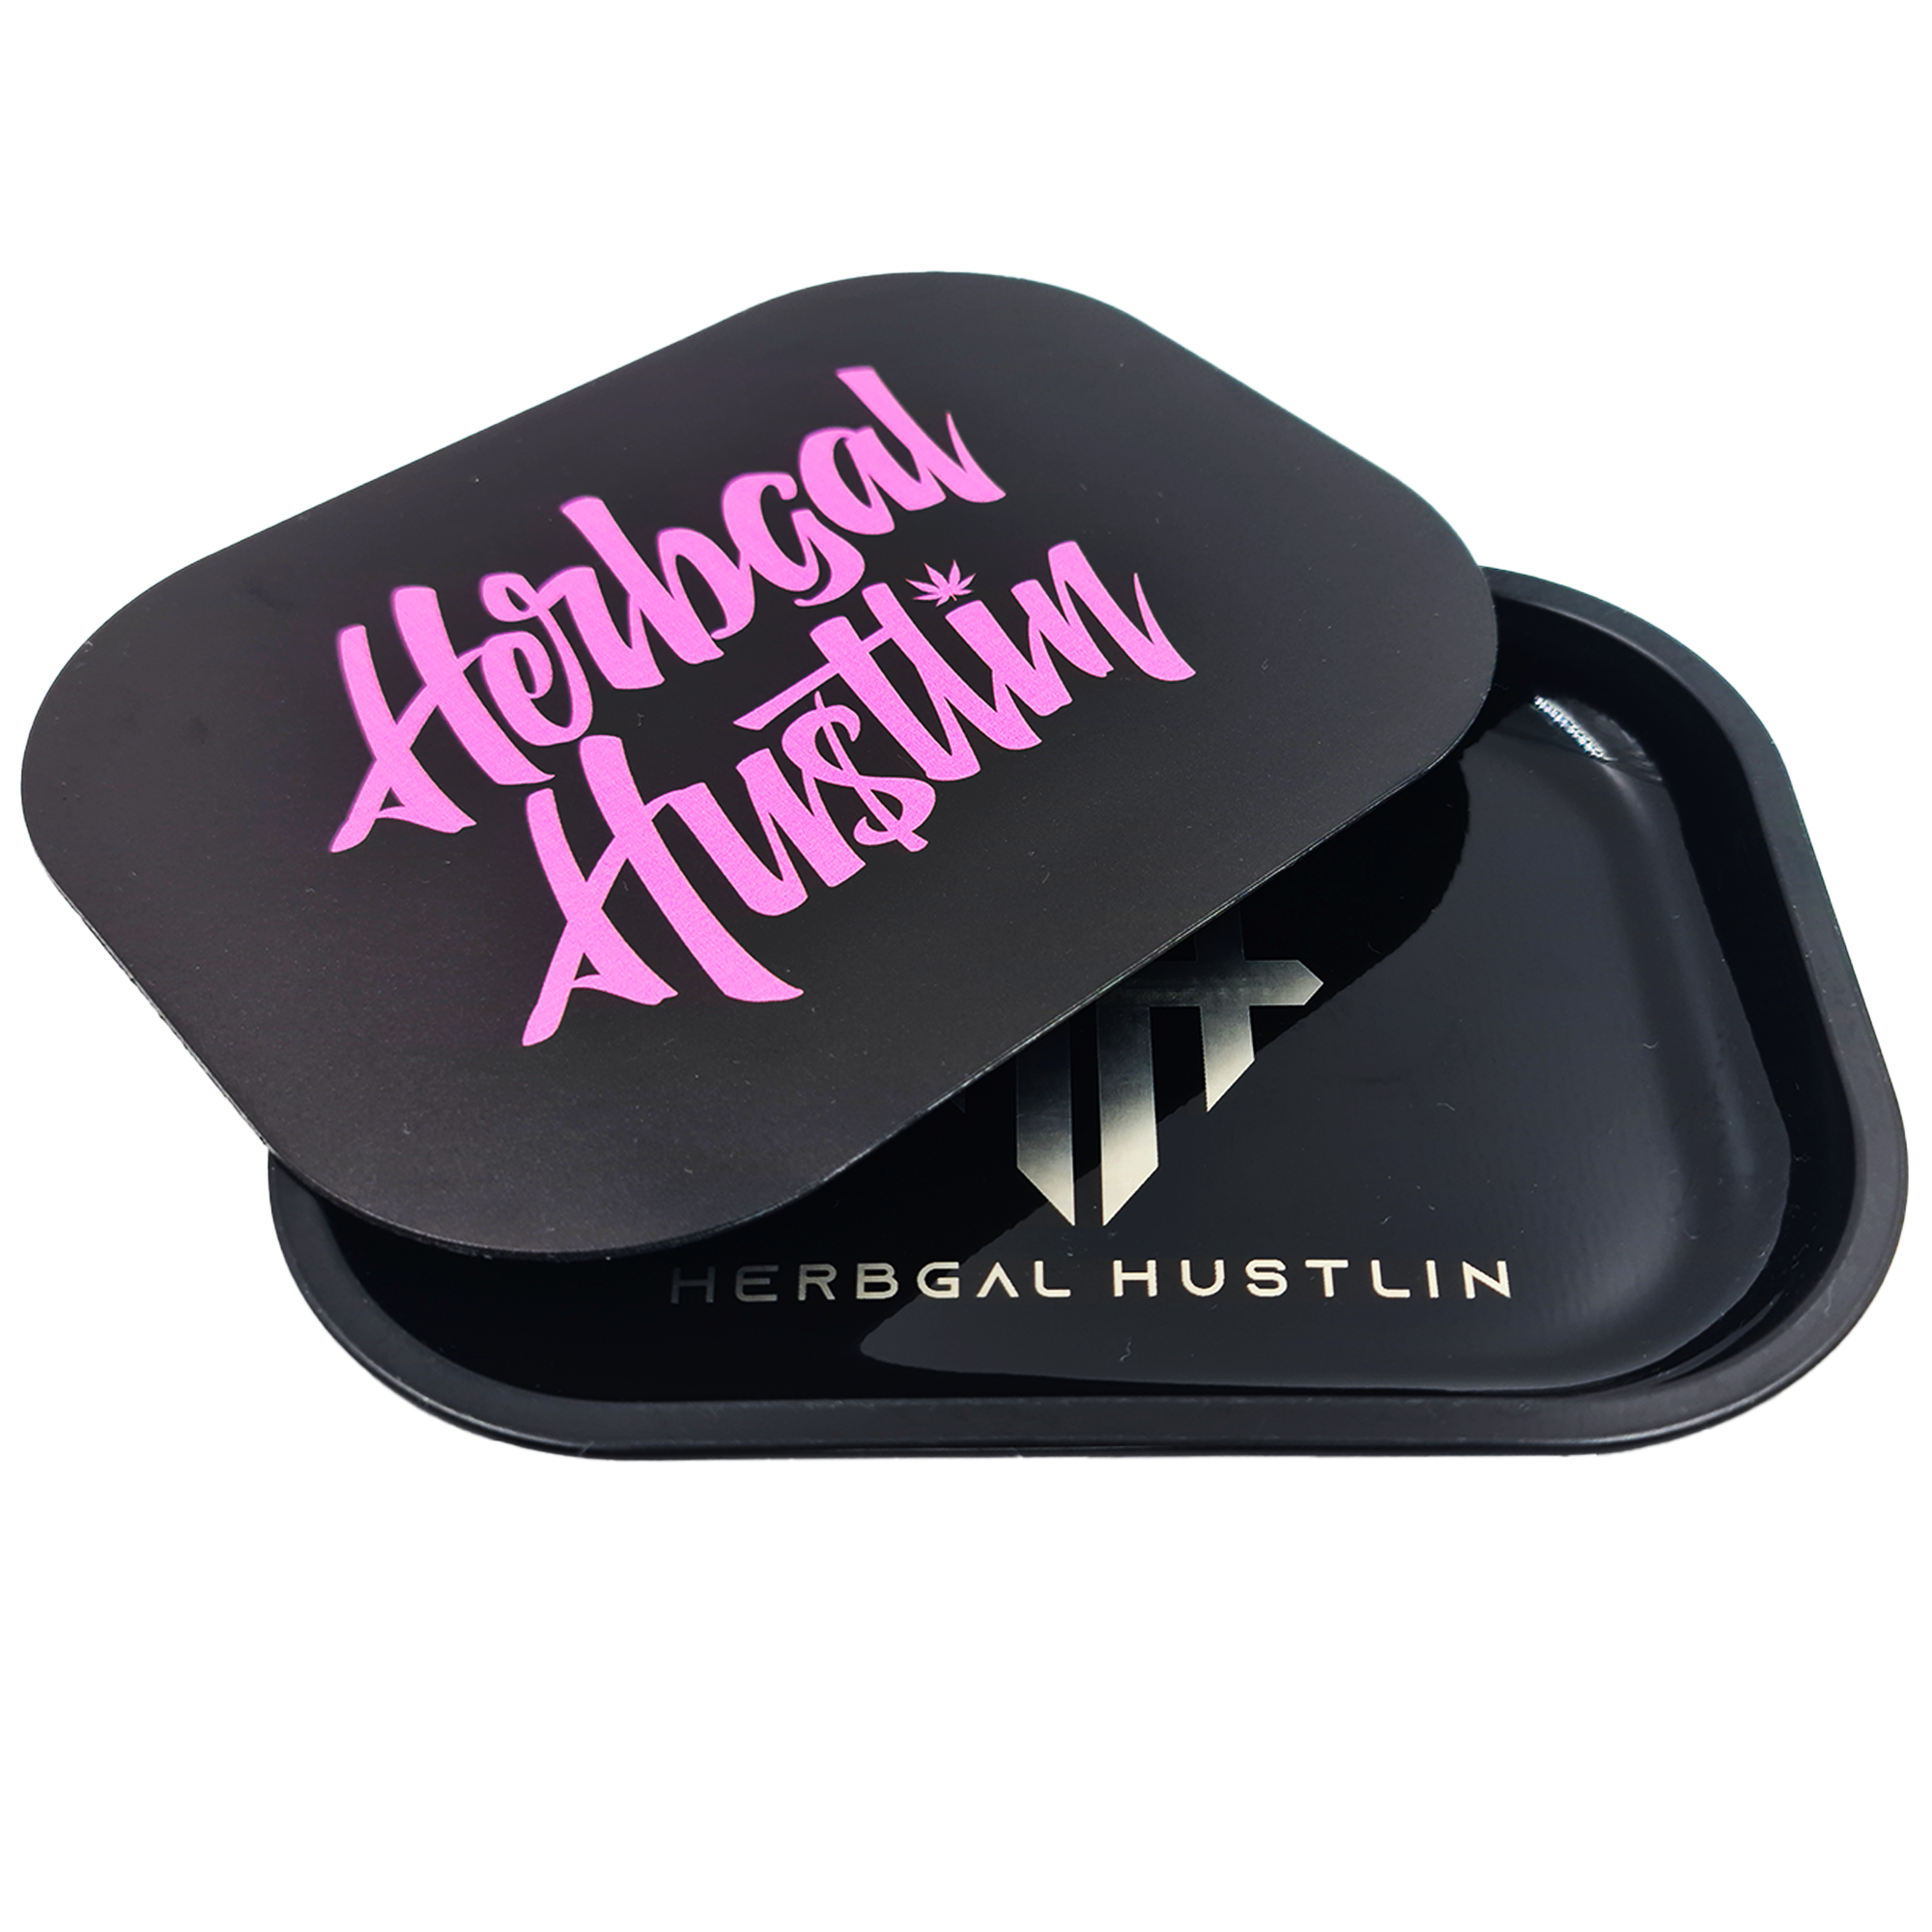 Herbgal Hustlin Script Magnetic Tray - Black/Pink